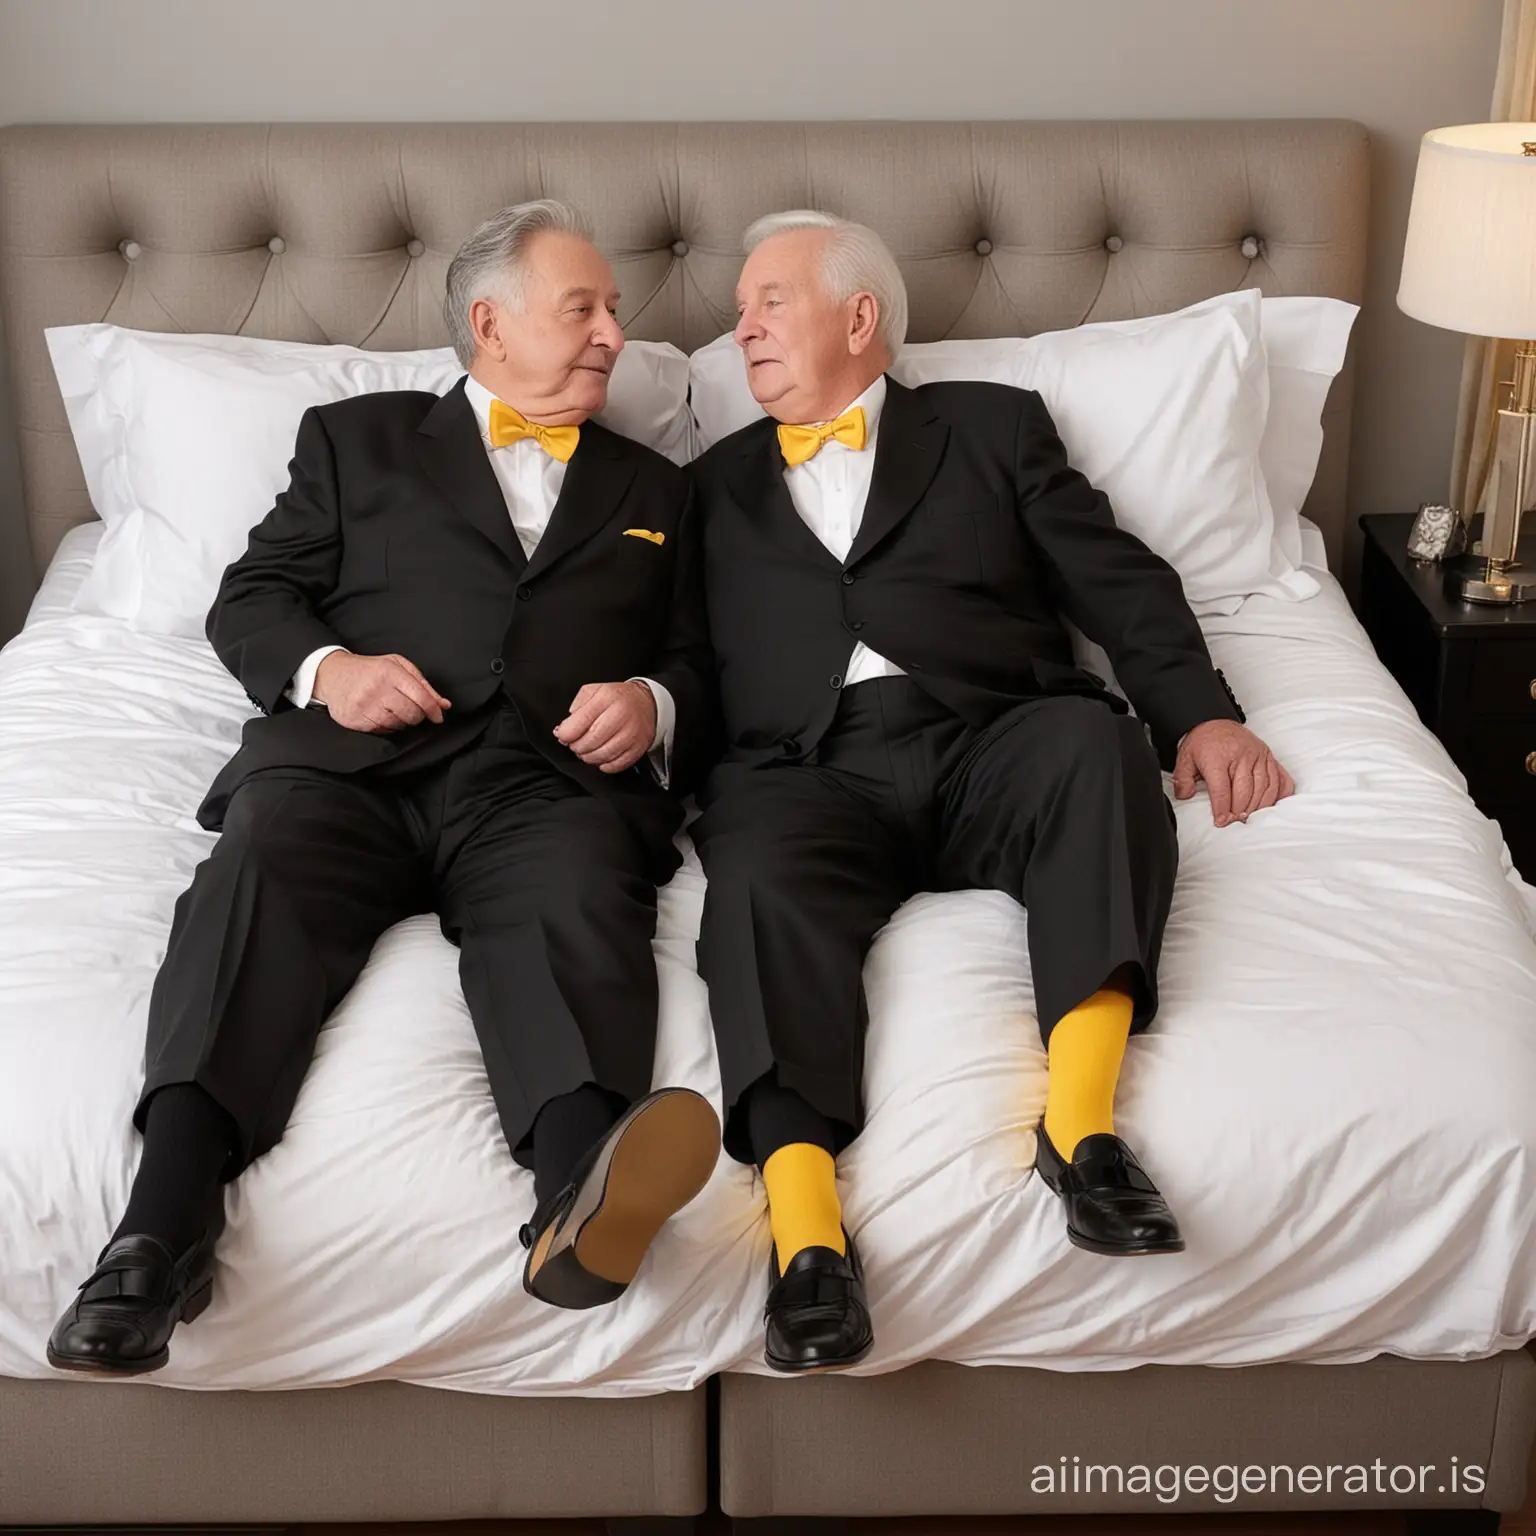 Elderly-Couple-Affectionately-Embracing-in-Bedroom-Scene